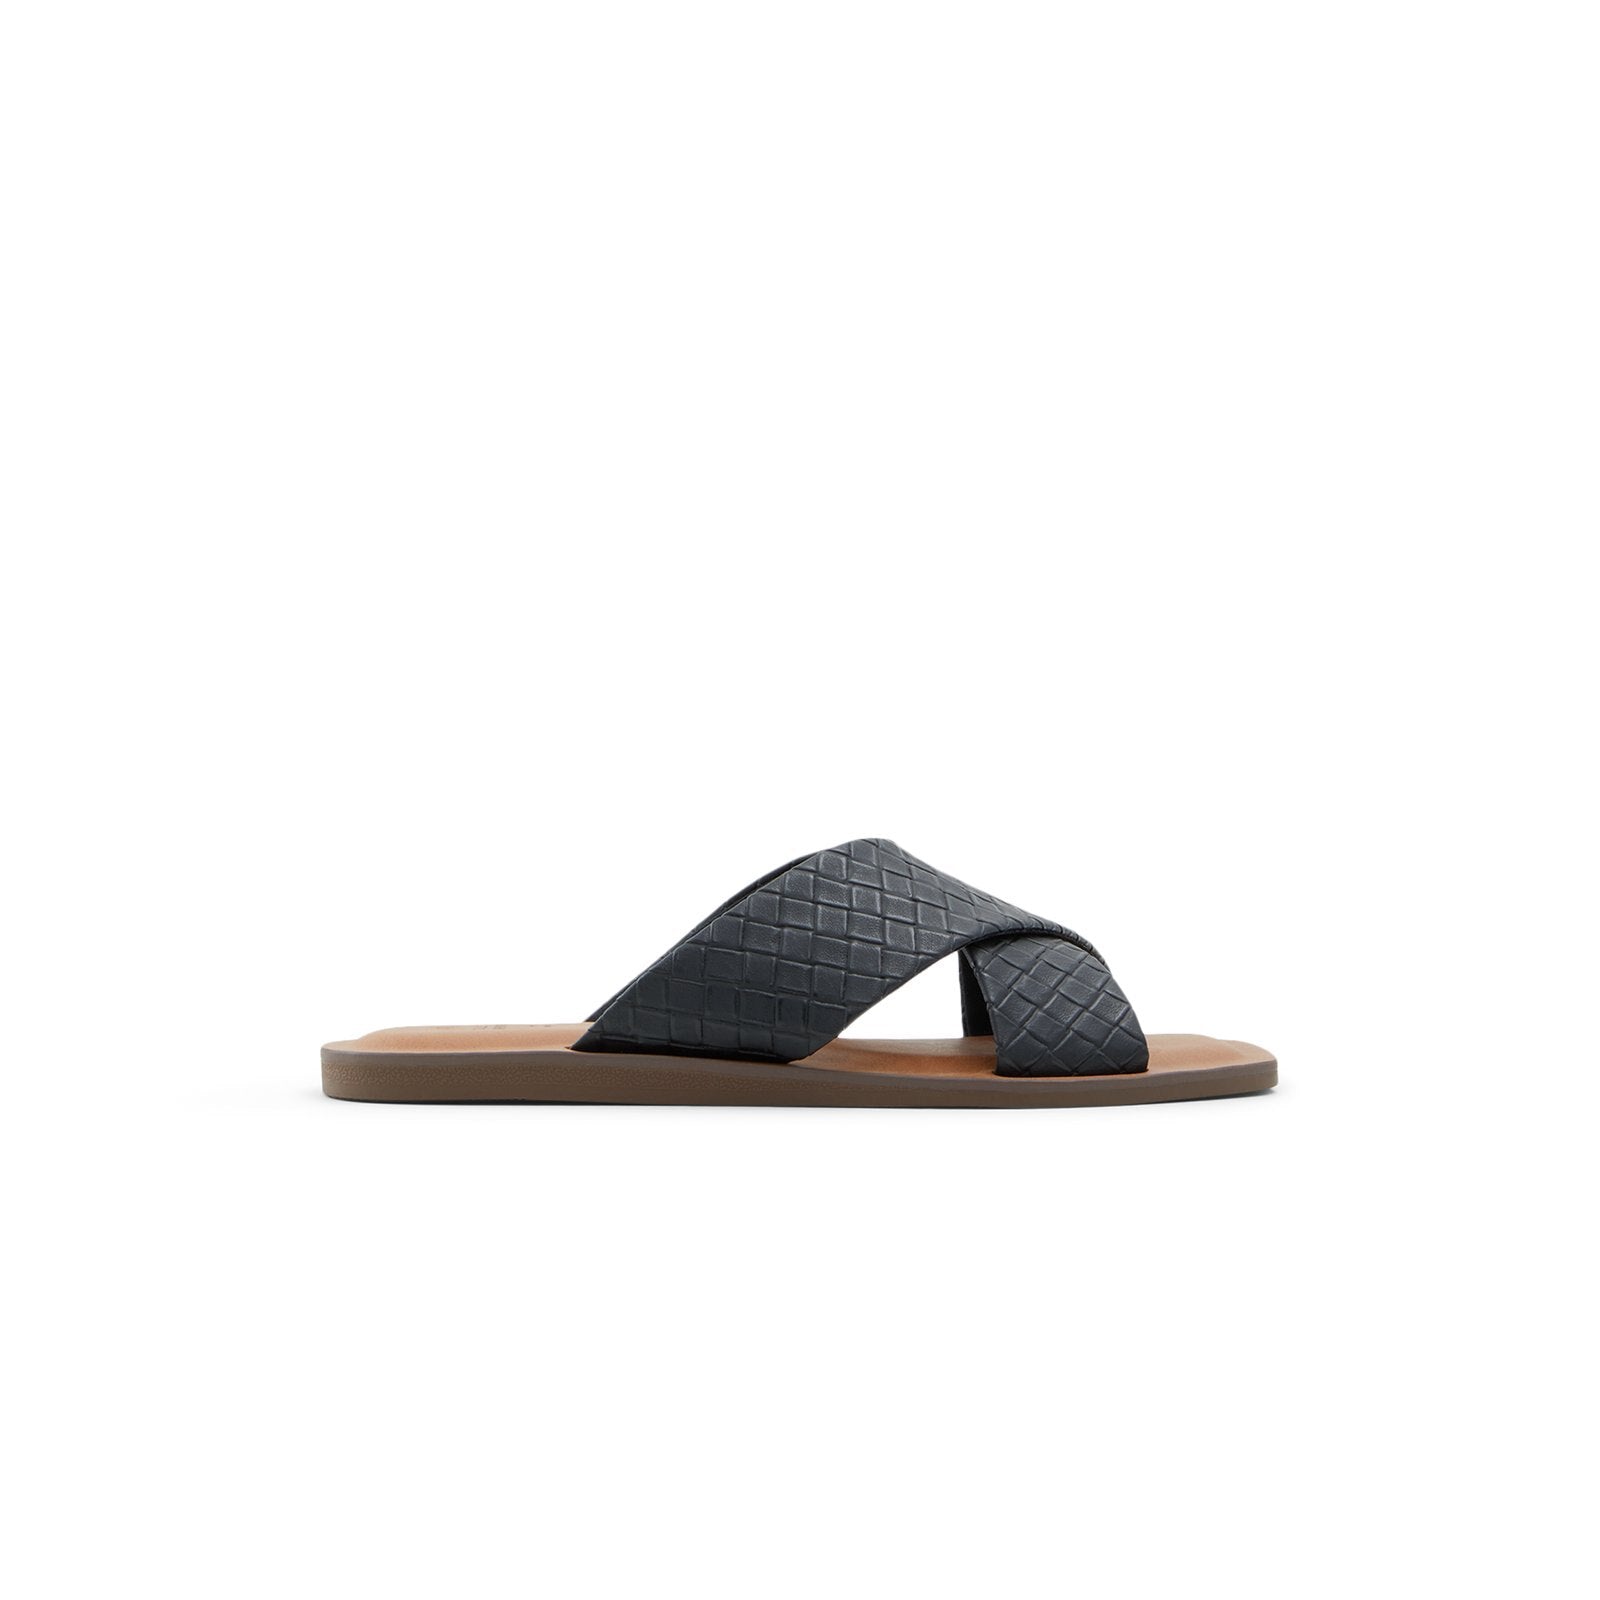 Bailia / Flat Sandals Women Shoes - BLACK - CALL IT SPRING KSA